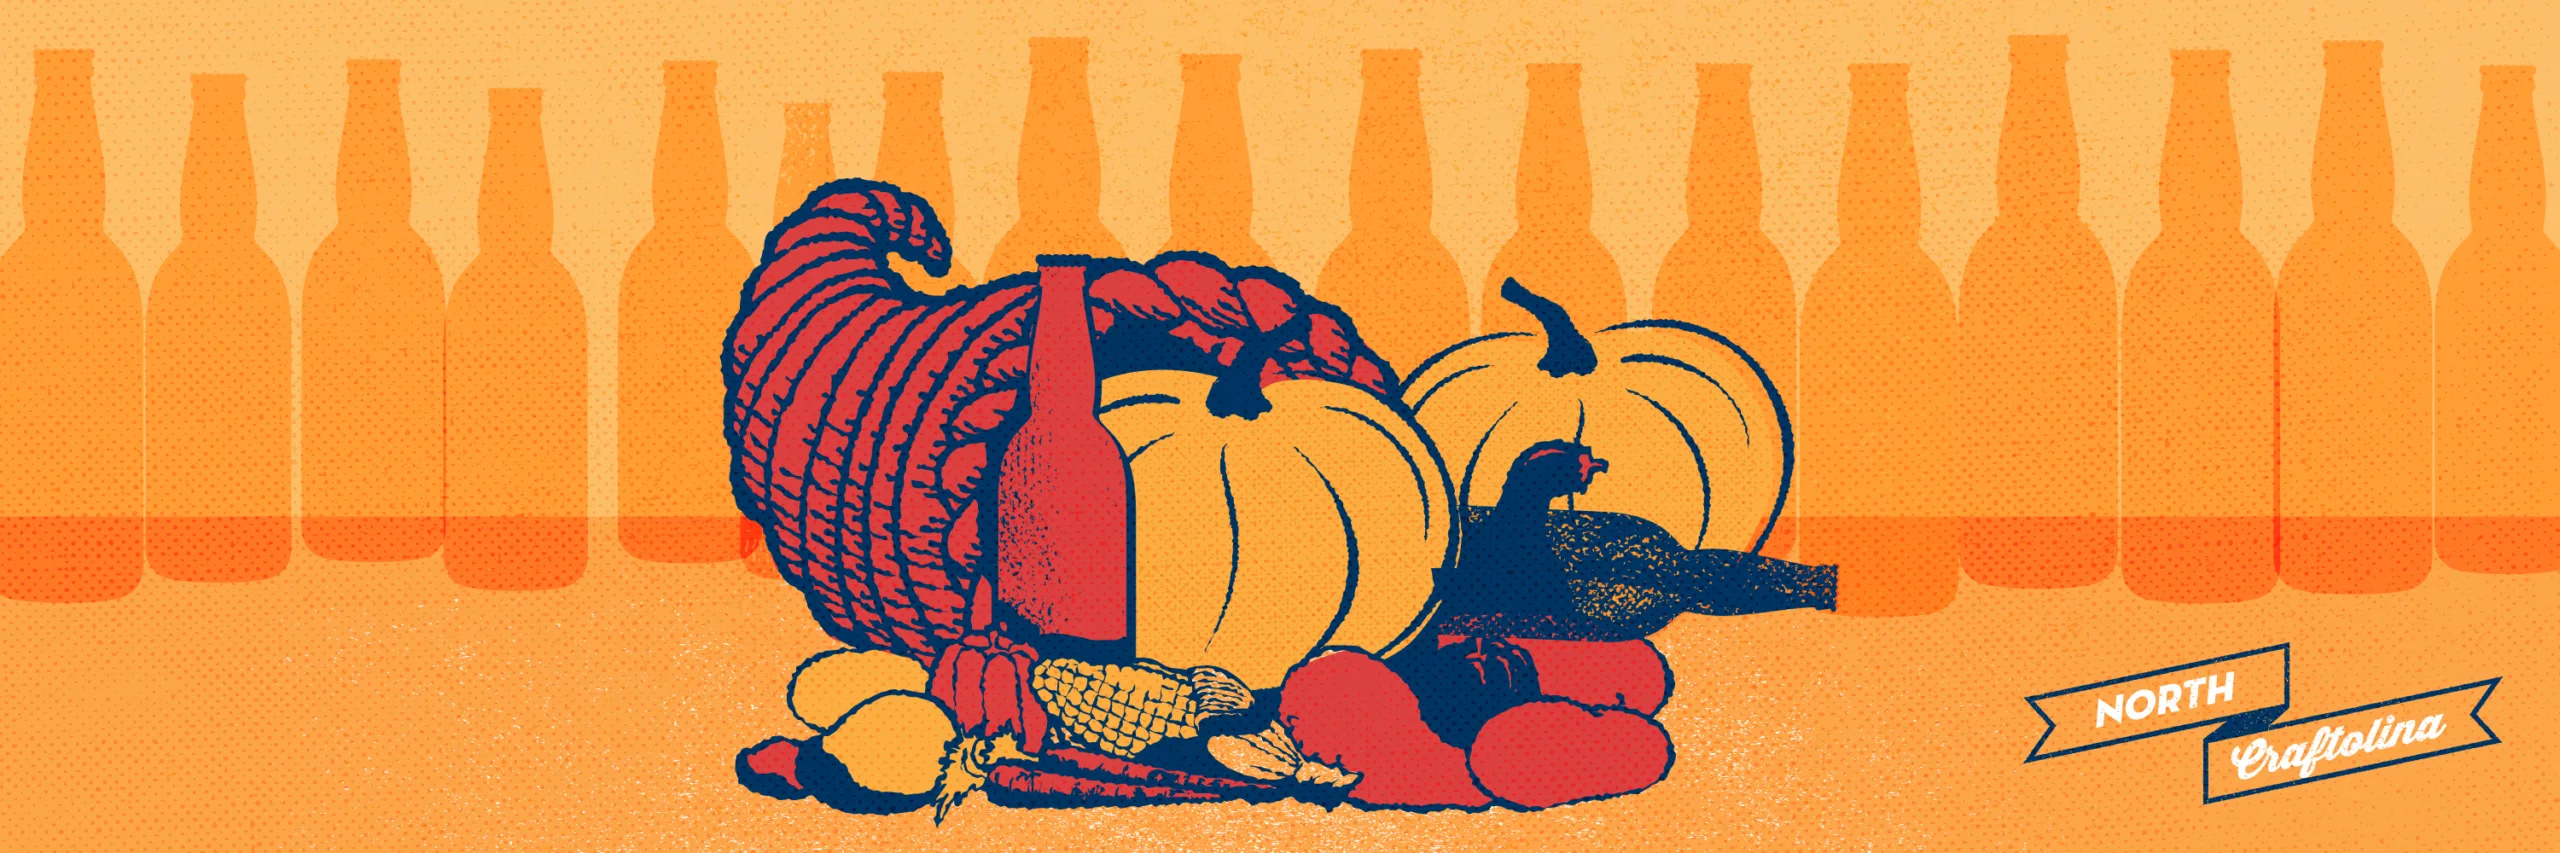 NC Fall Beers Illustration